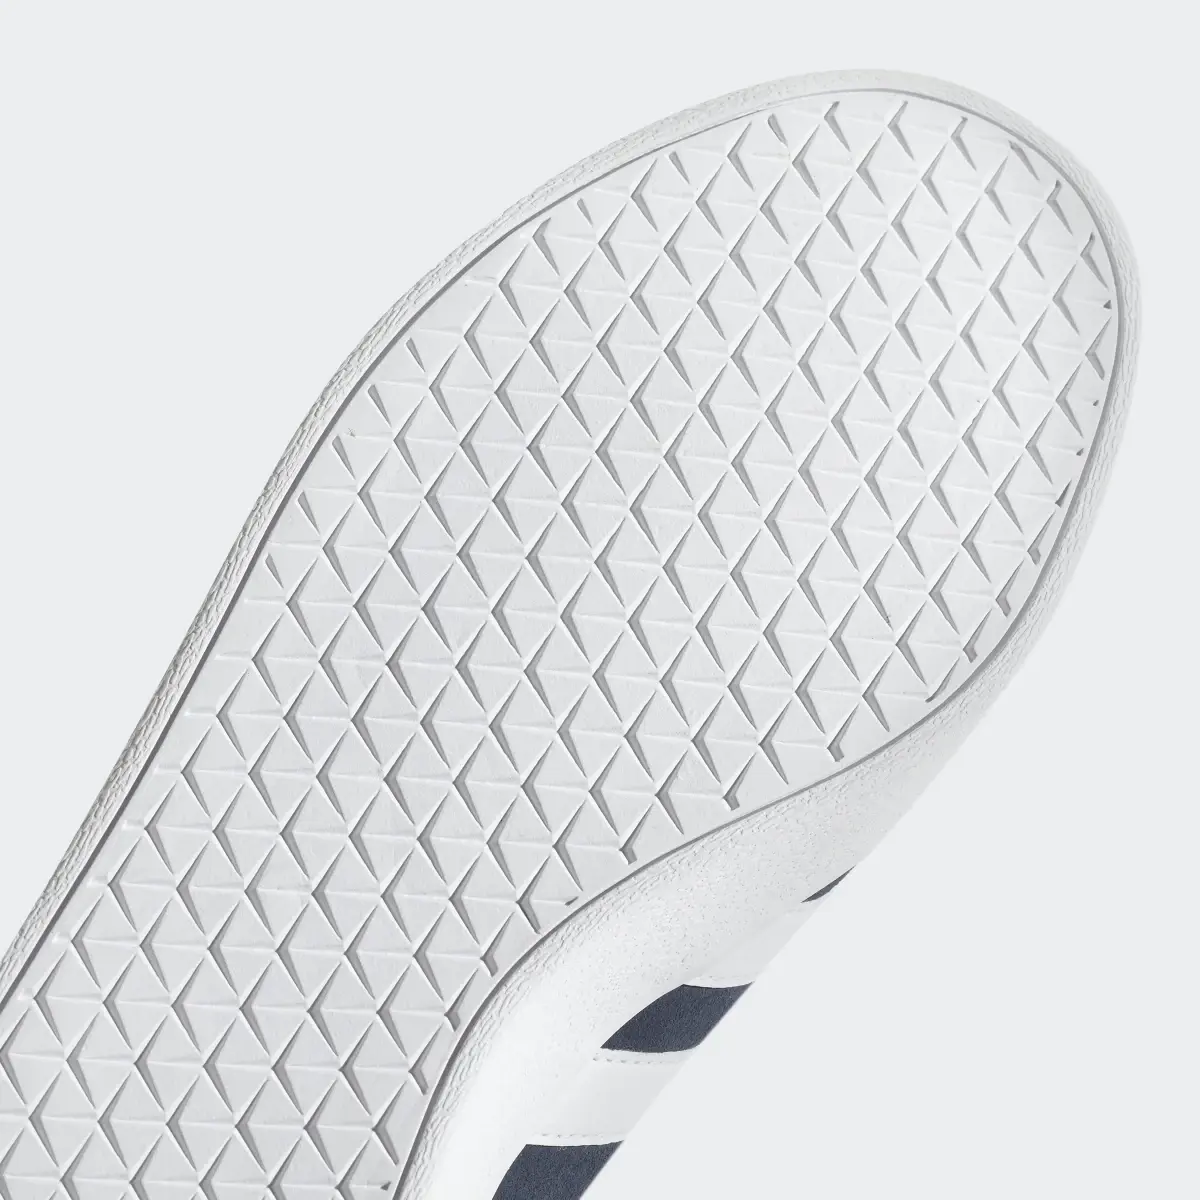 Adidas VL Court 2.0 Shoes. 3